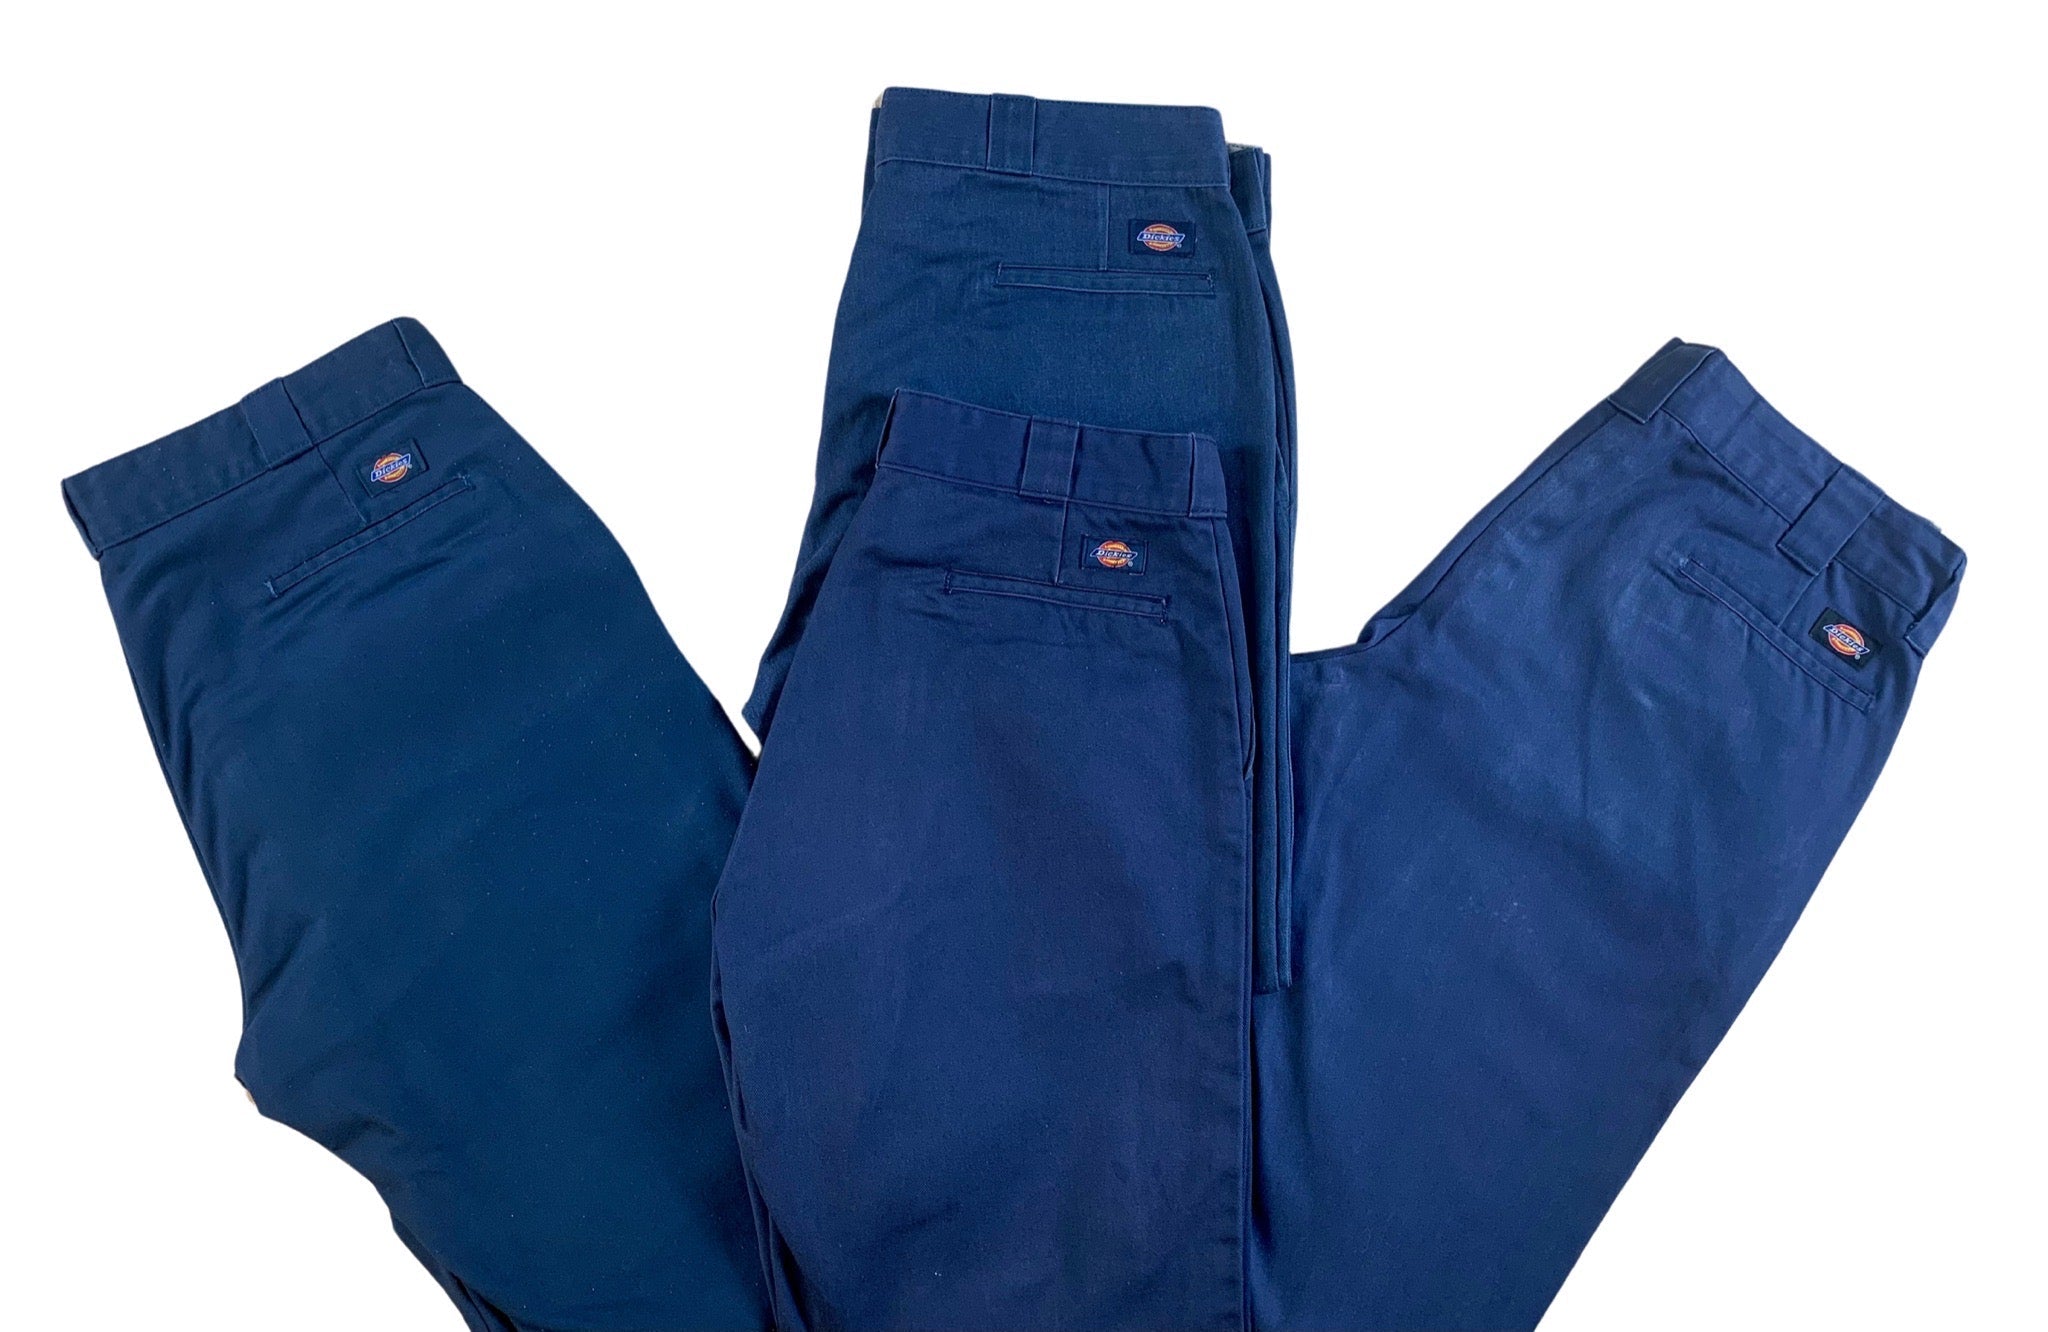 1x Vintage DICKIES Navy Blue Straight Leg Trousers - Waist 56 - Length 30 - Vintage Superstore Online